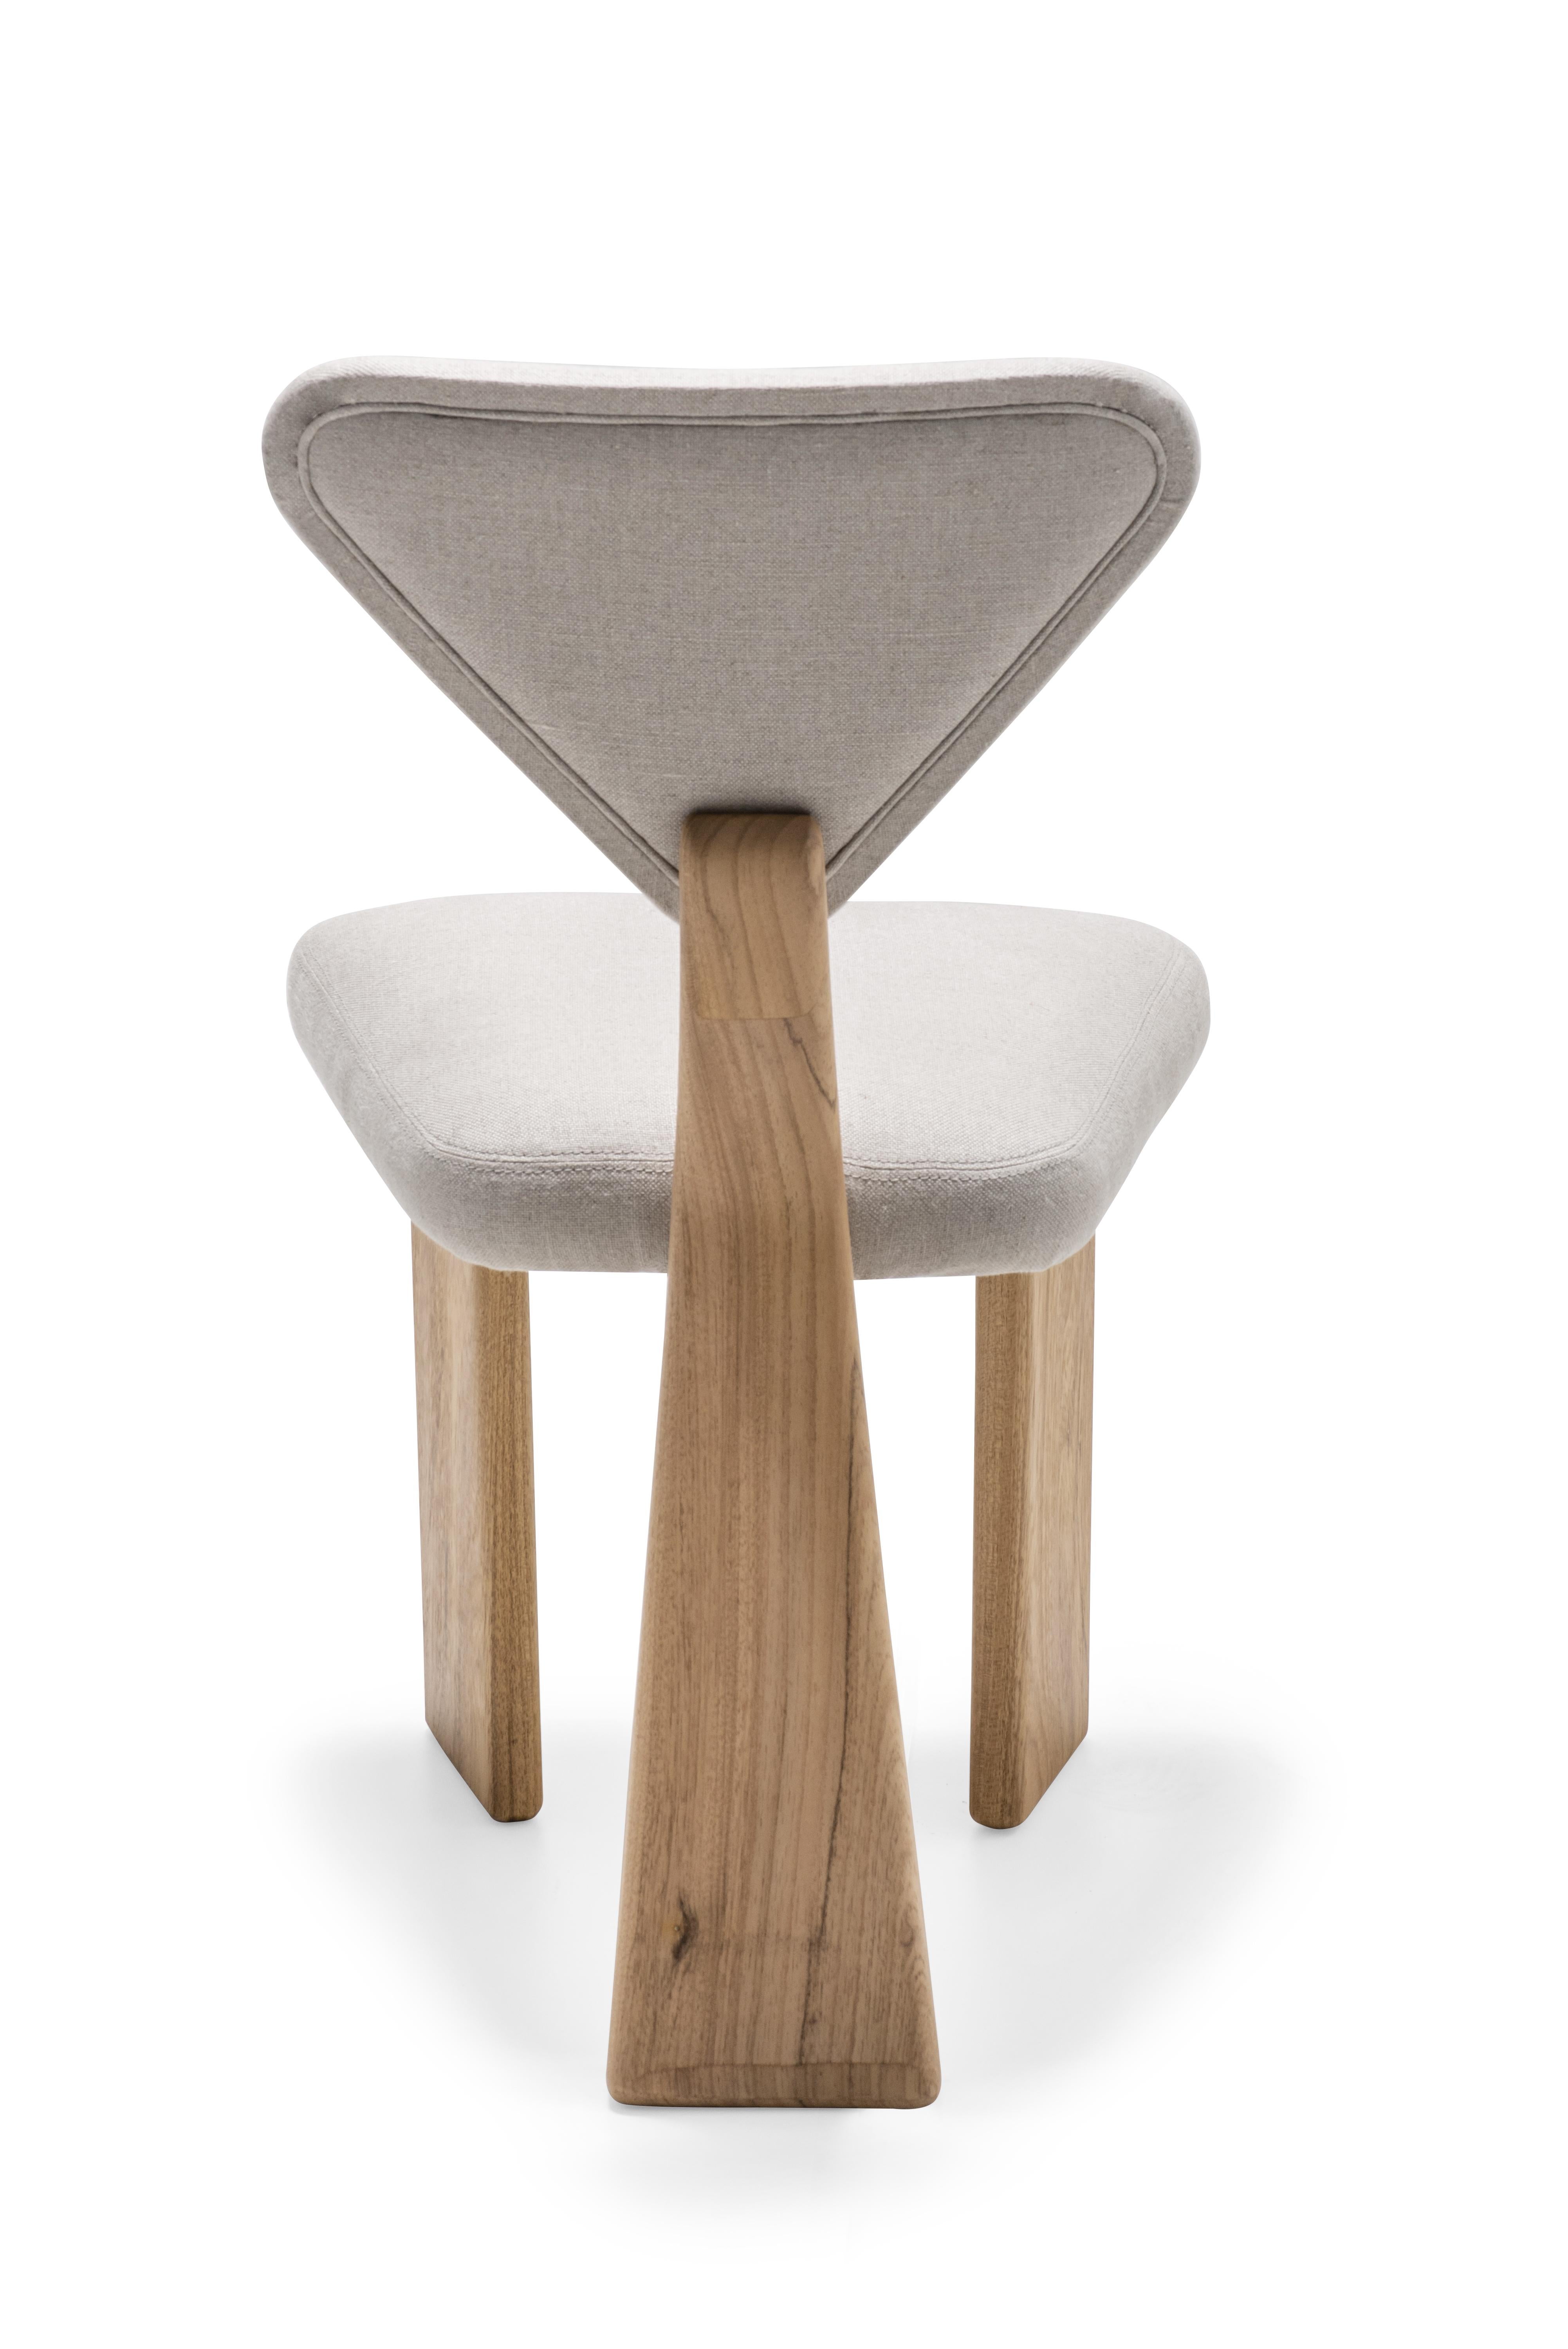 Modern A set of  Giraffe Chair in Solid Brazilian Walnut Wood by Juliana Vasconcellos